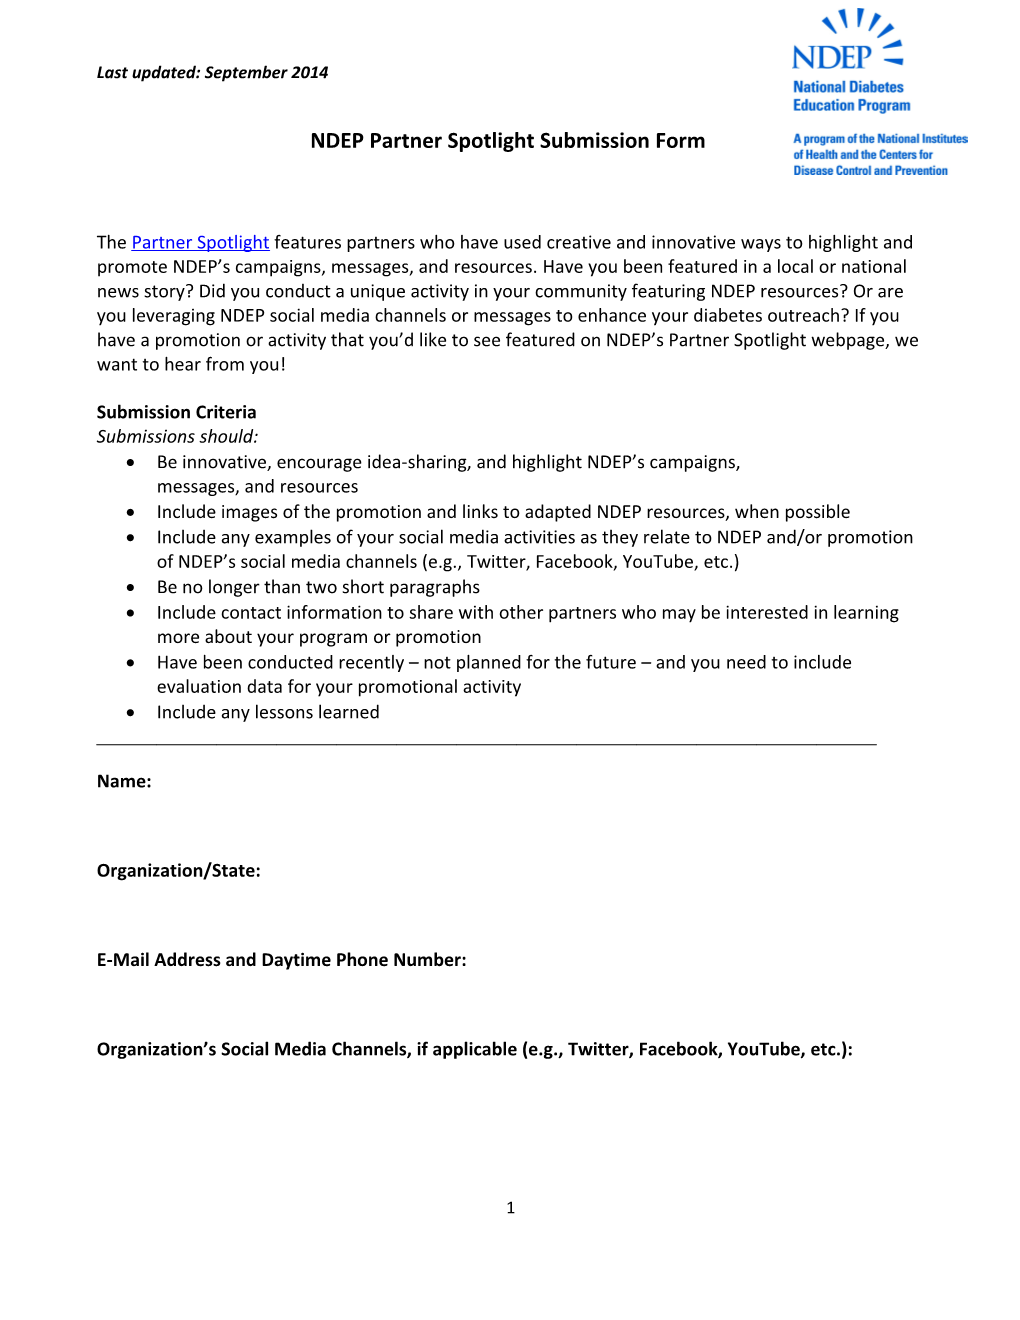 NDEP Partner Spotlight Submission Form